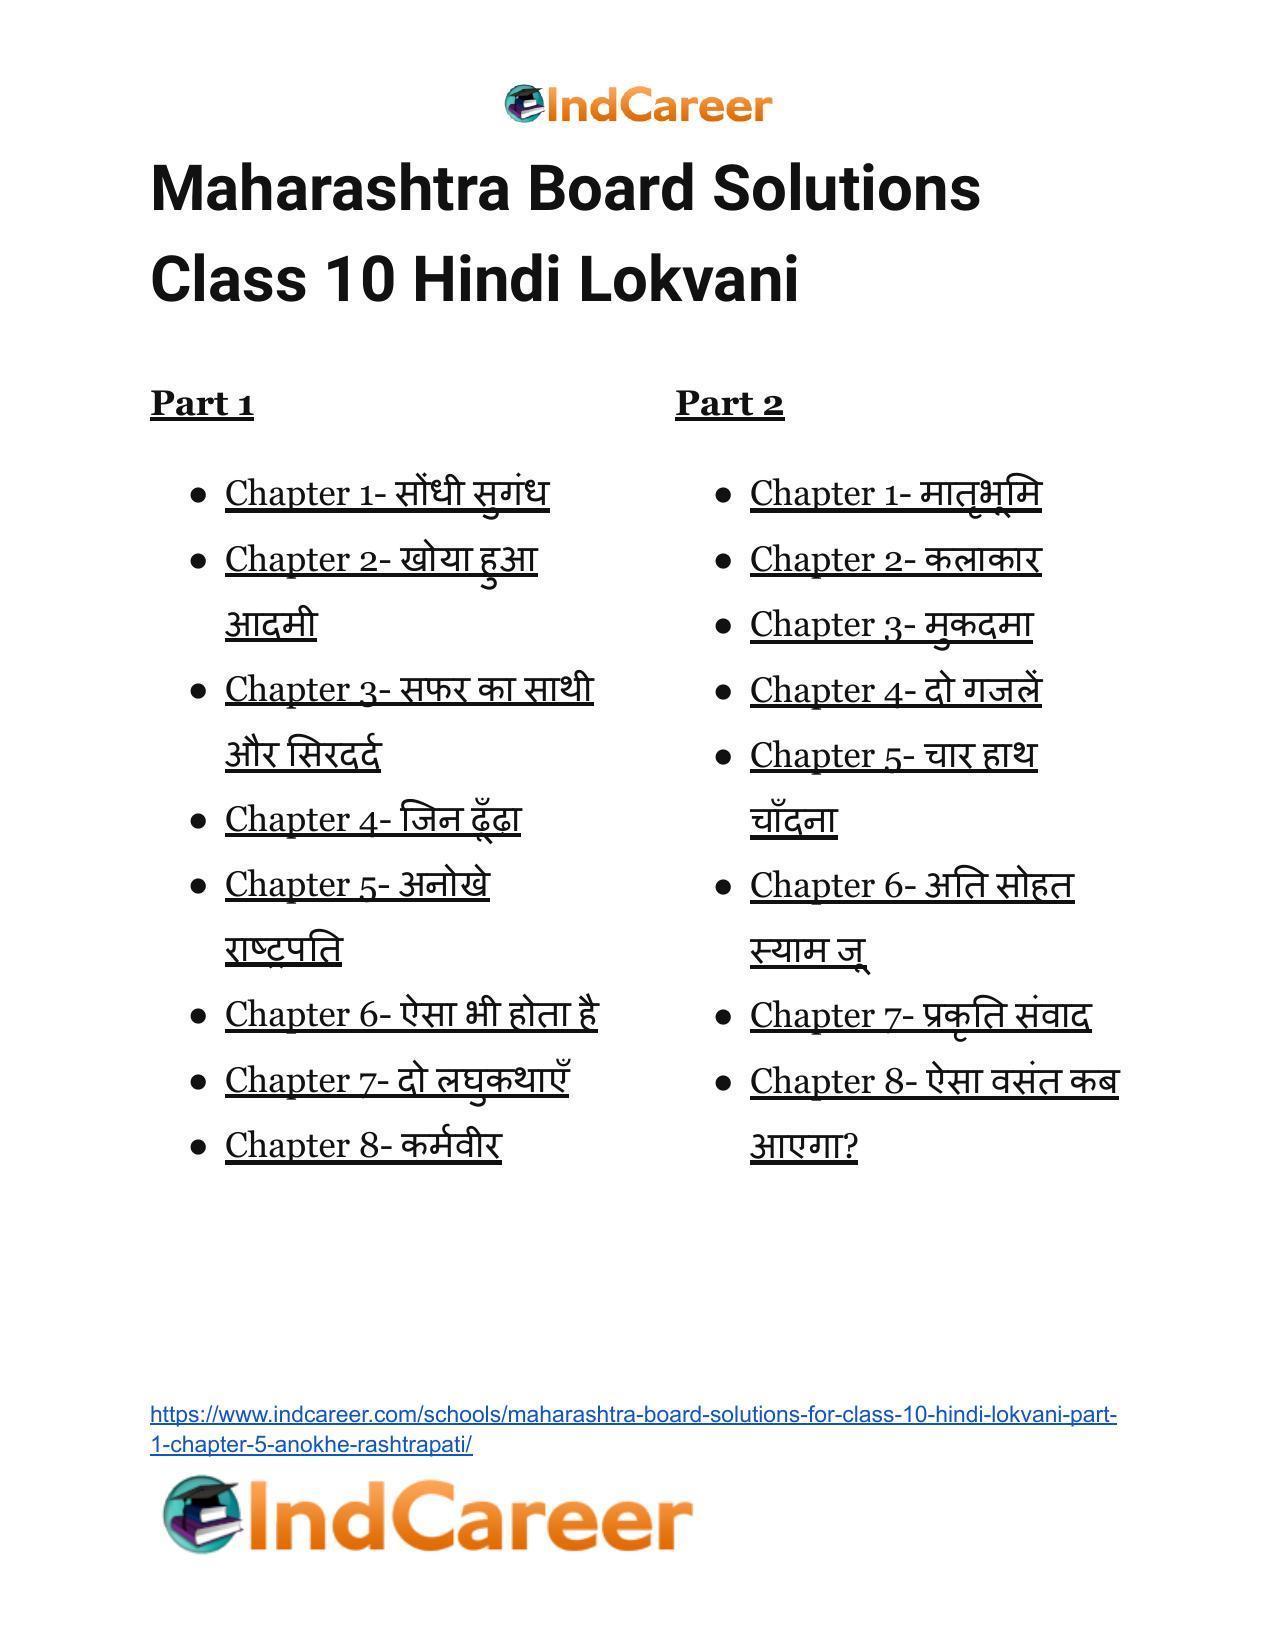 Maharashtra Board Solutions for Class 10- Hindi Lokvani (Part 1): Chapter 5- अनोखे राष्ट्रपति - Page 39